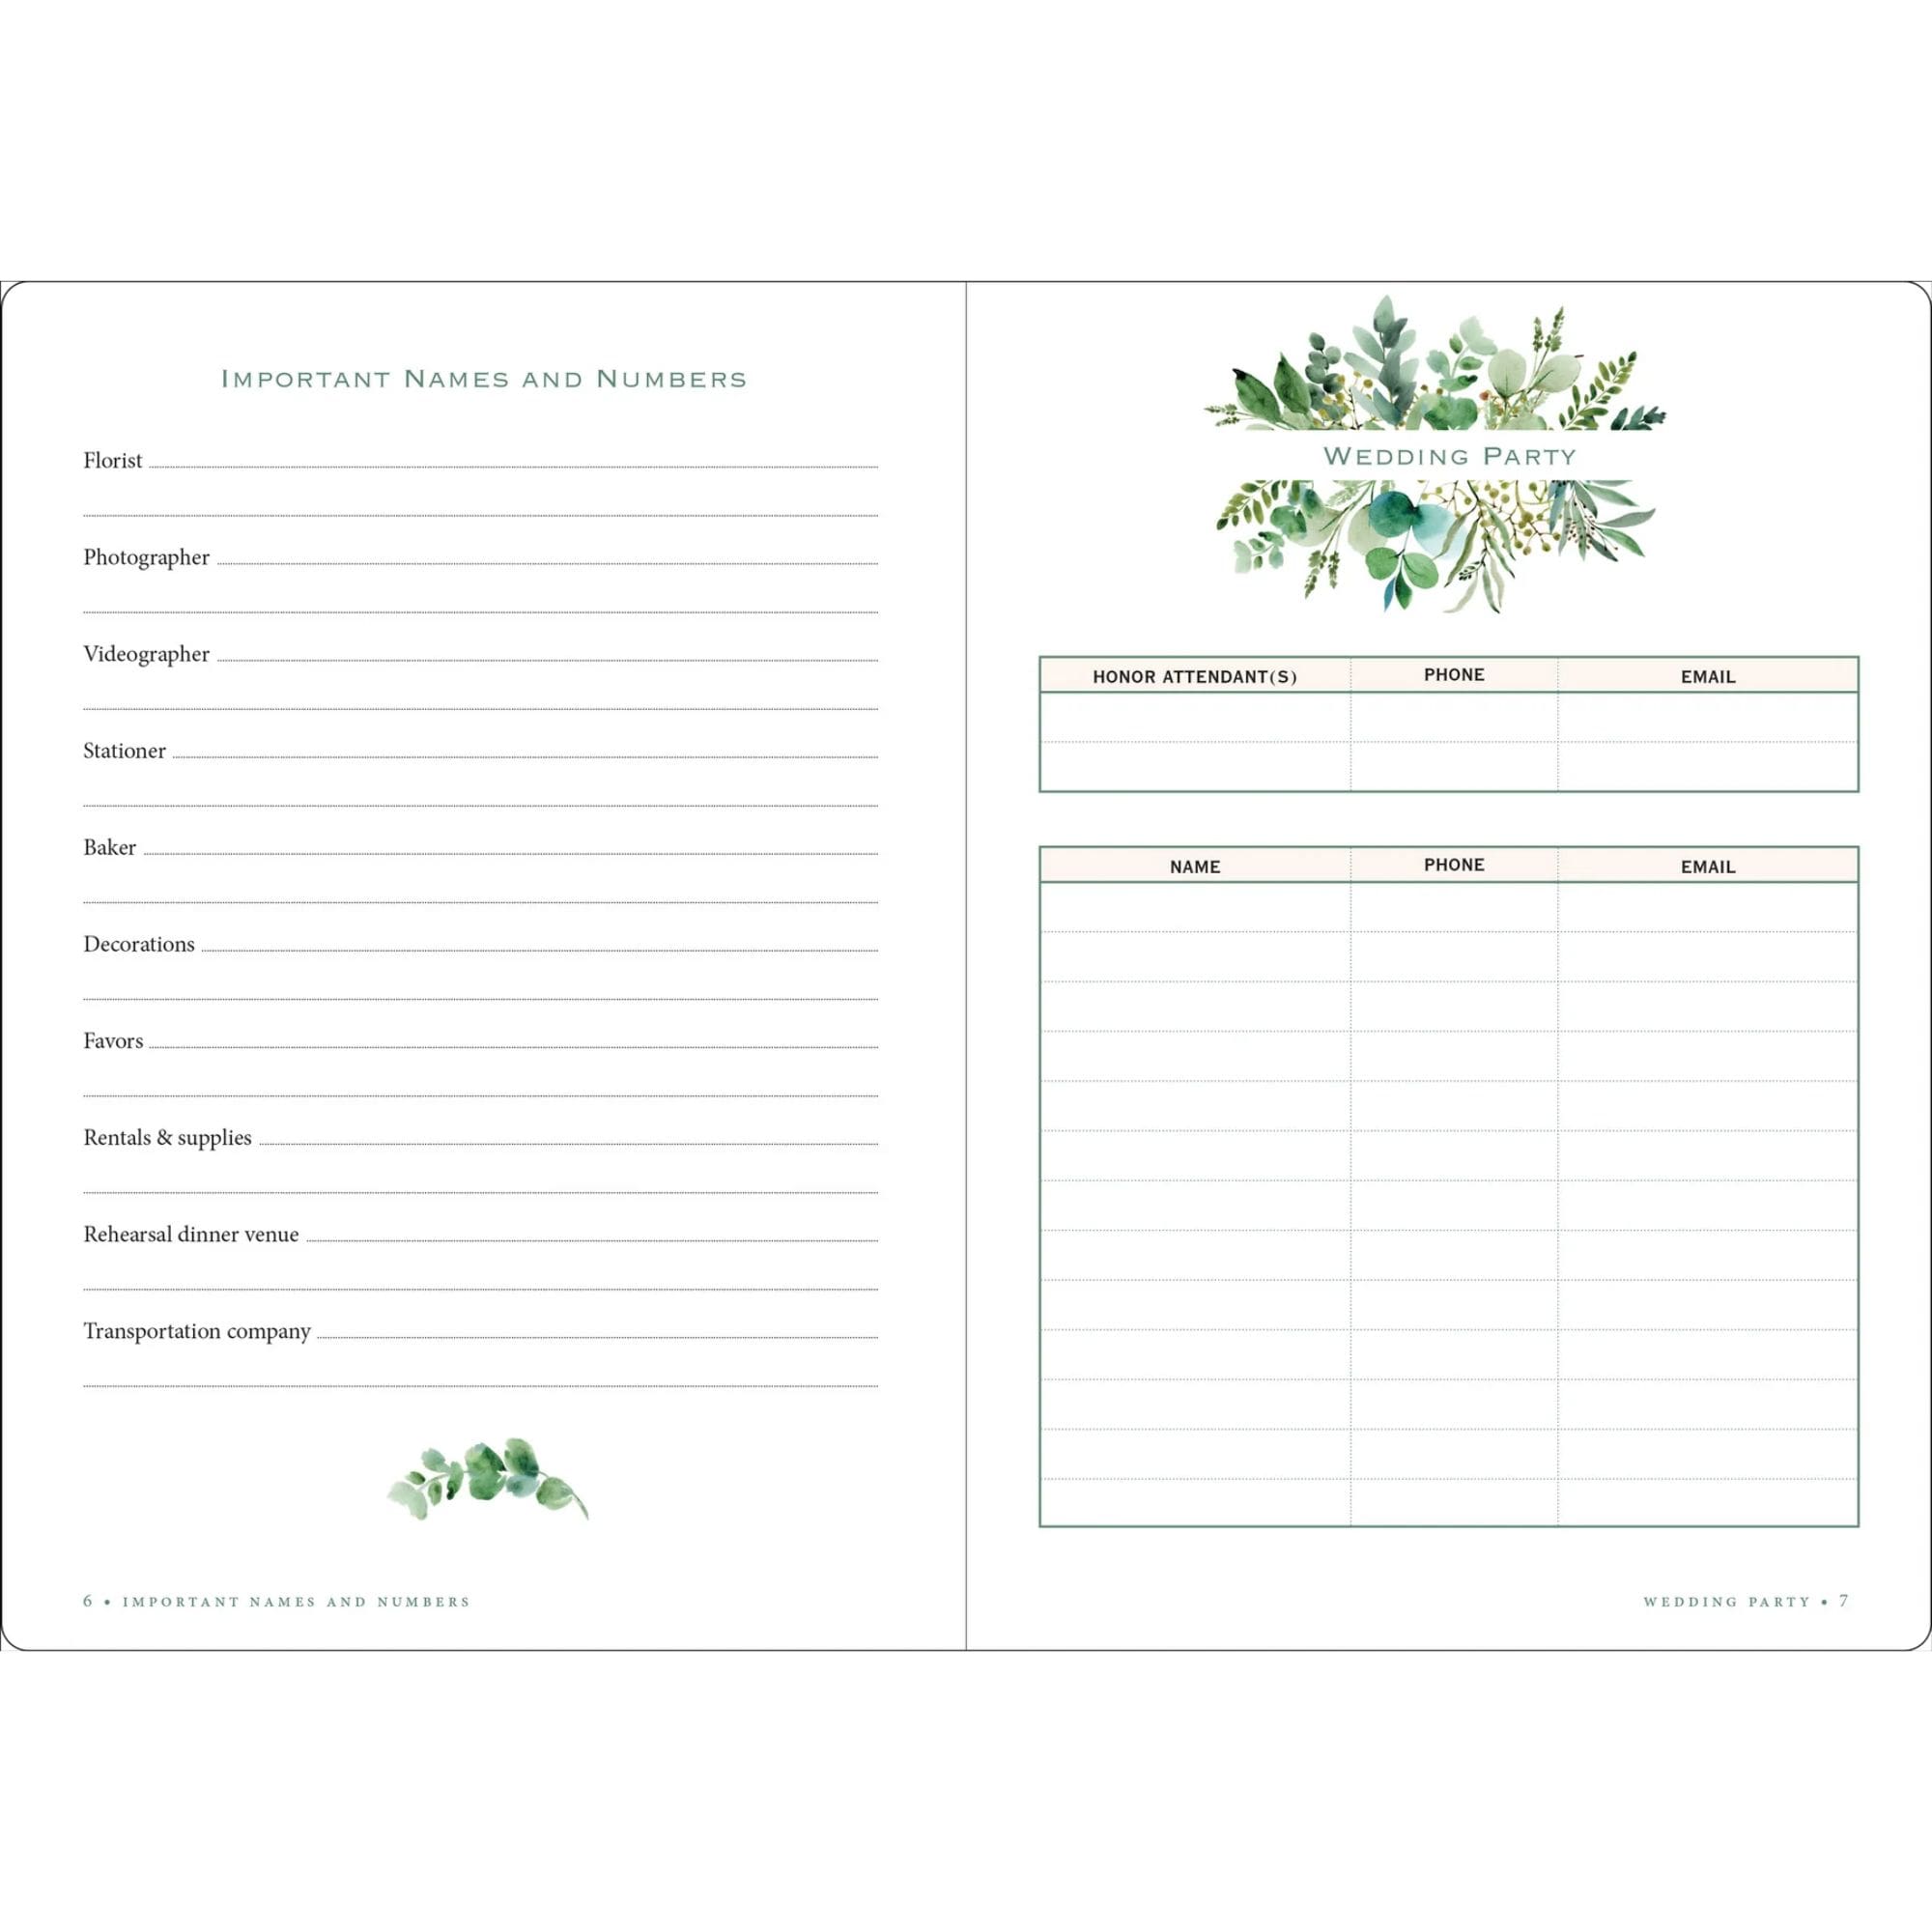 Peter Pauper Press The Wedding Planner Checklist inside pages - Paper Kooka Australia